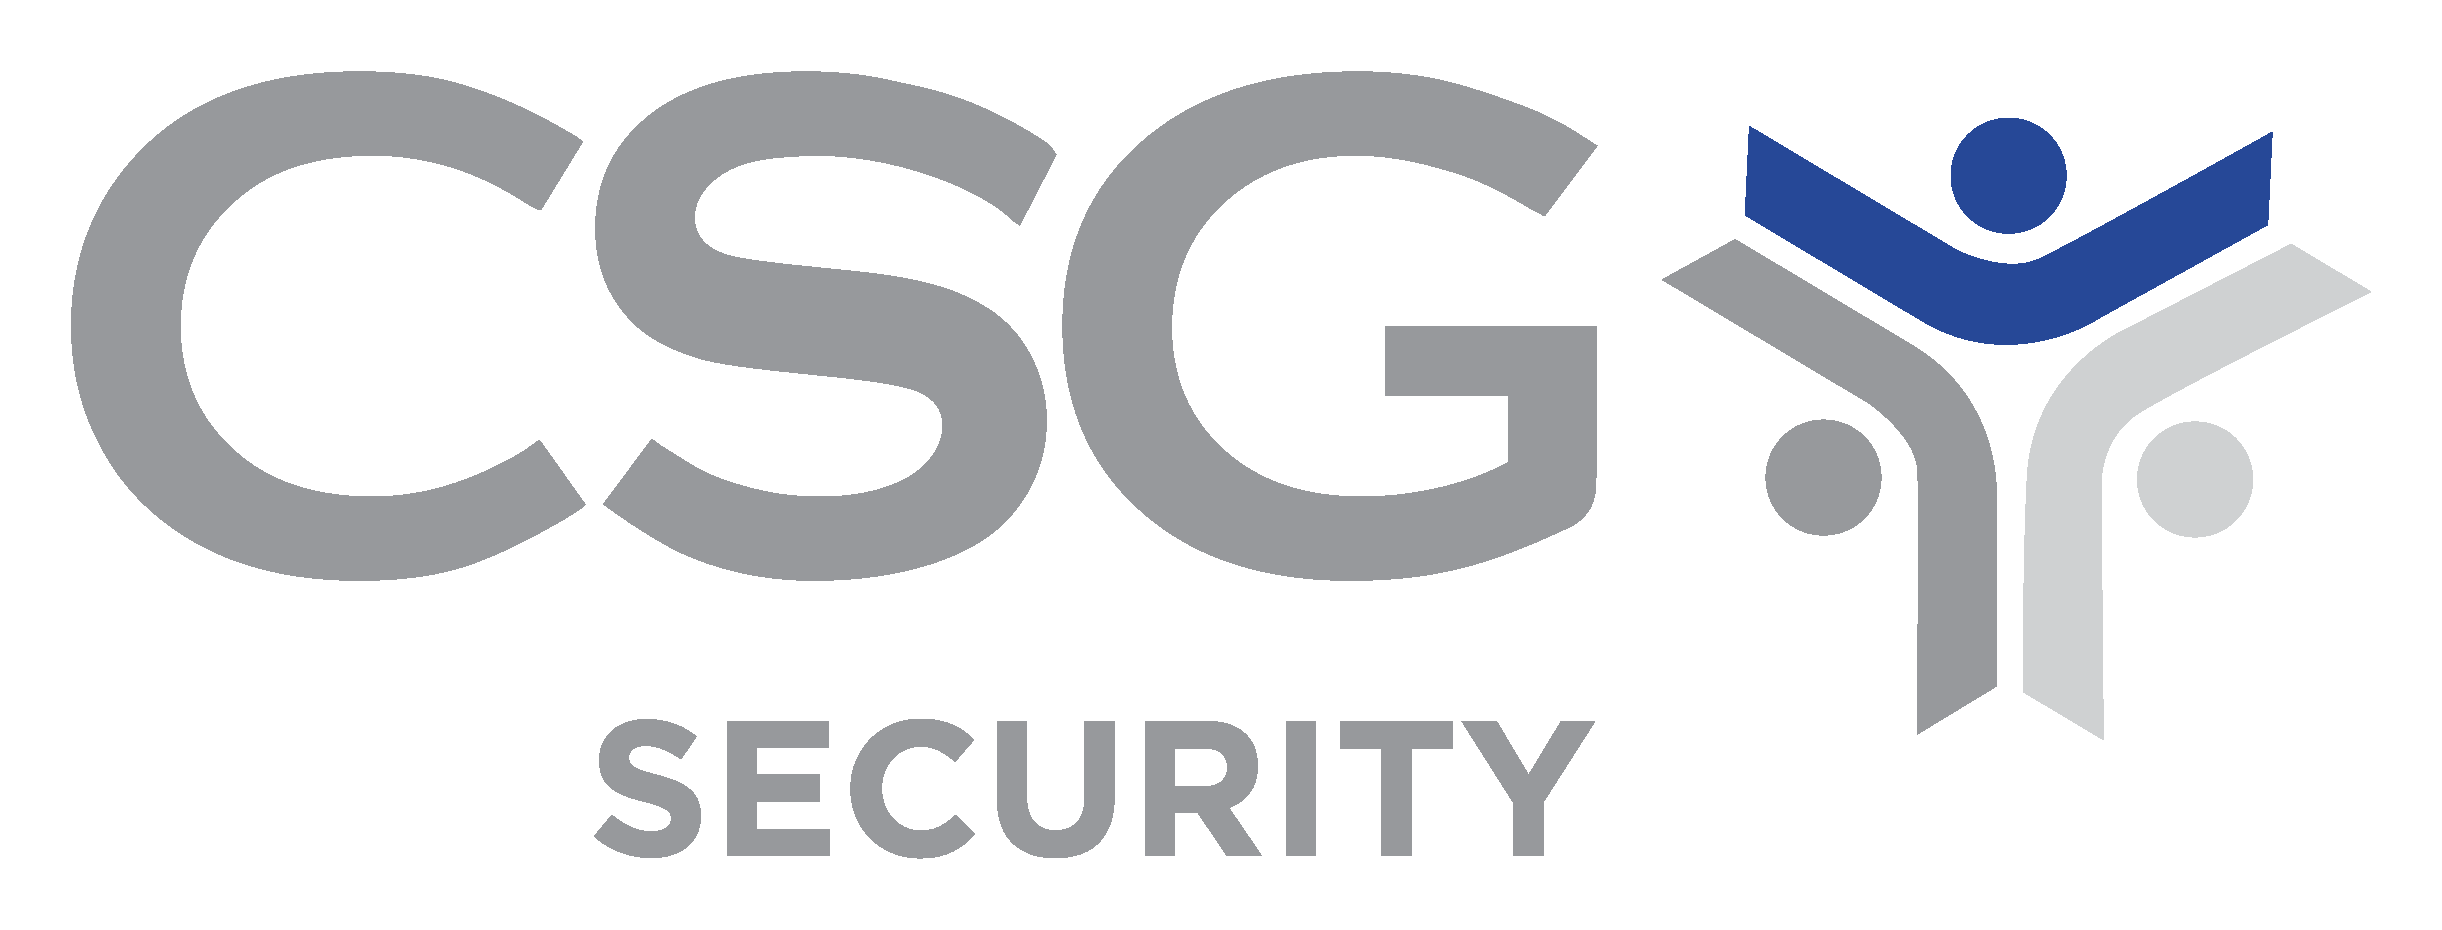 CSG Security (Pty) Ltd